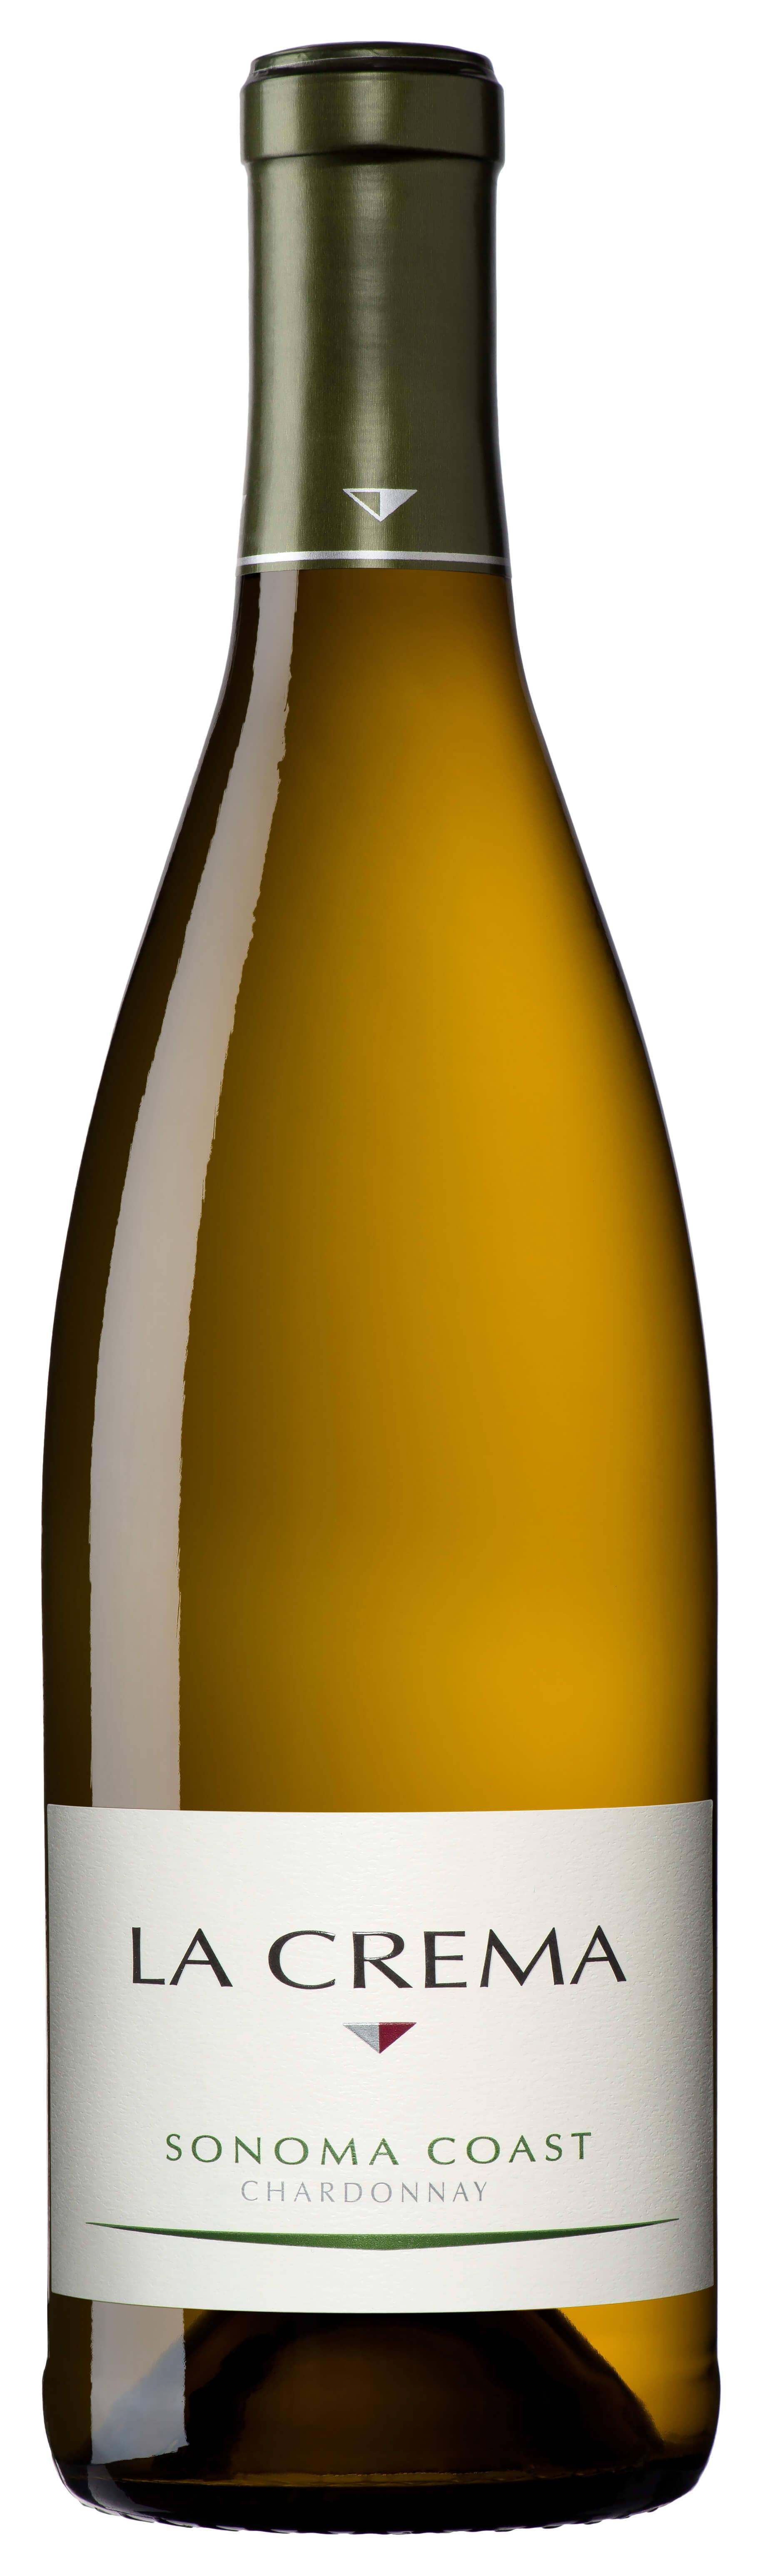 La Crema Sonoma Coast Chardonnay 2016 37.5cl Halves